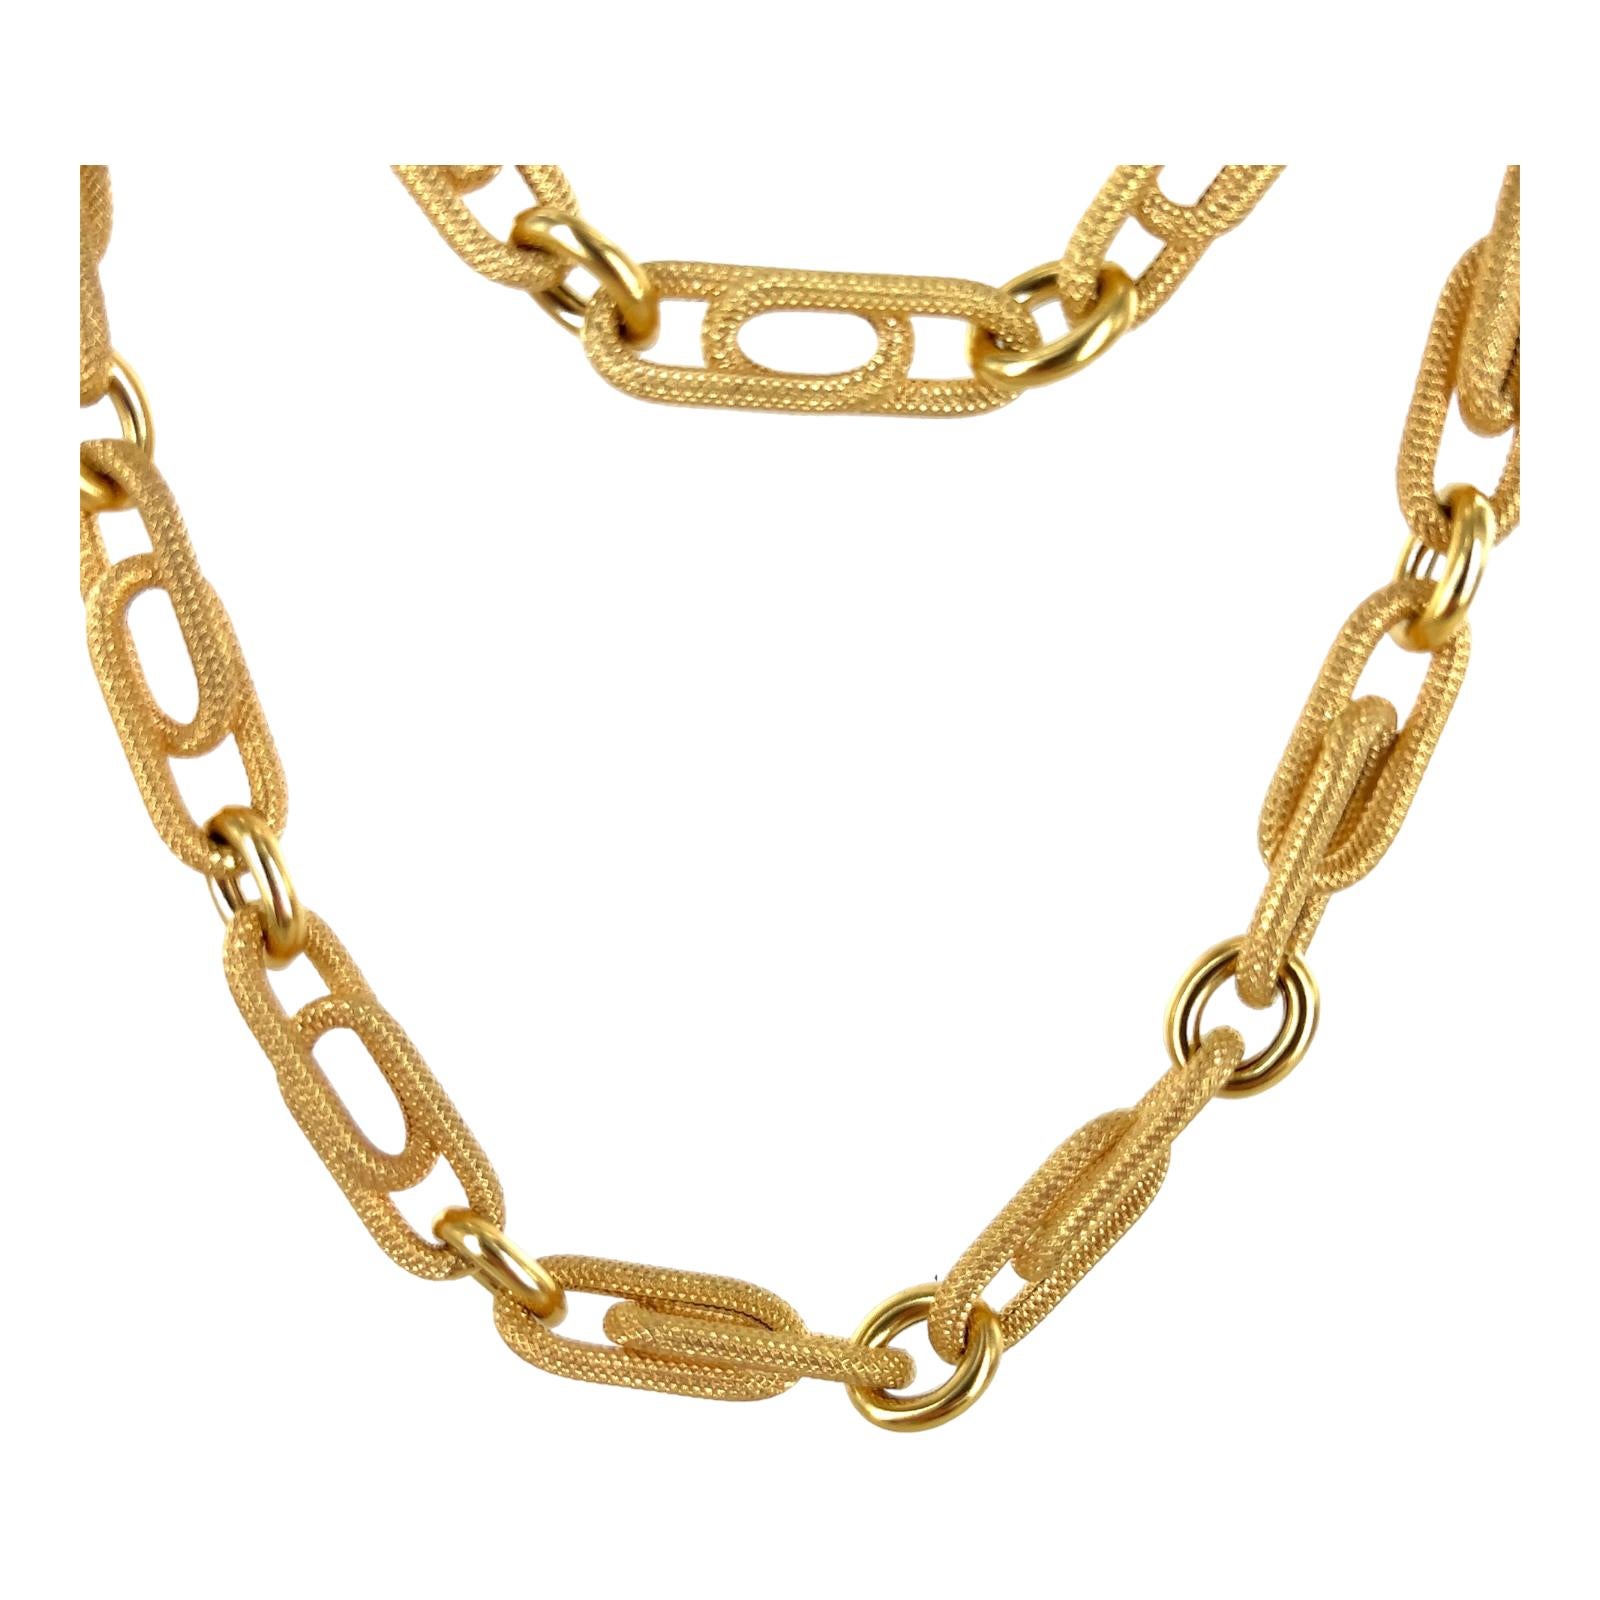 40 inch gold chain